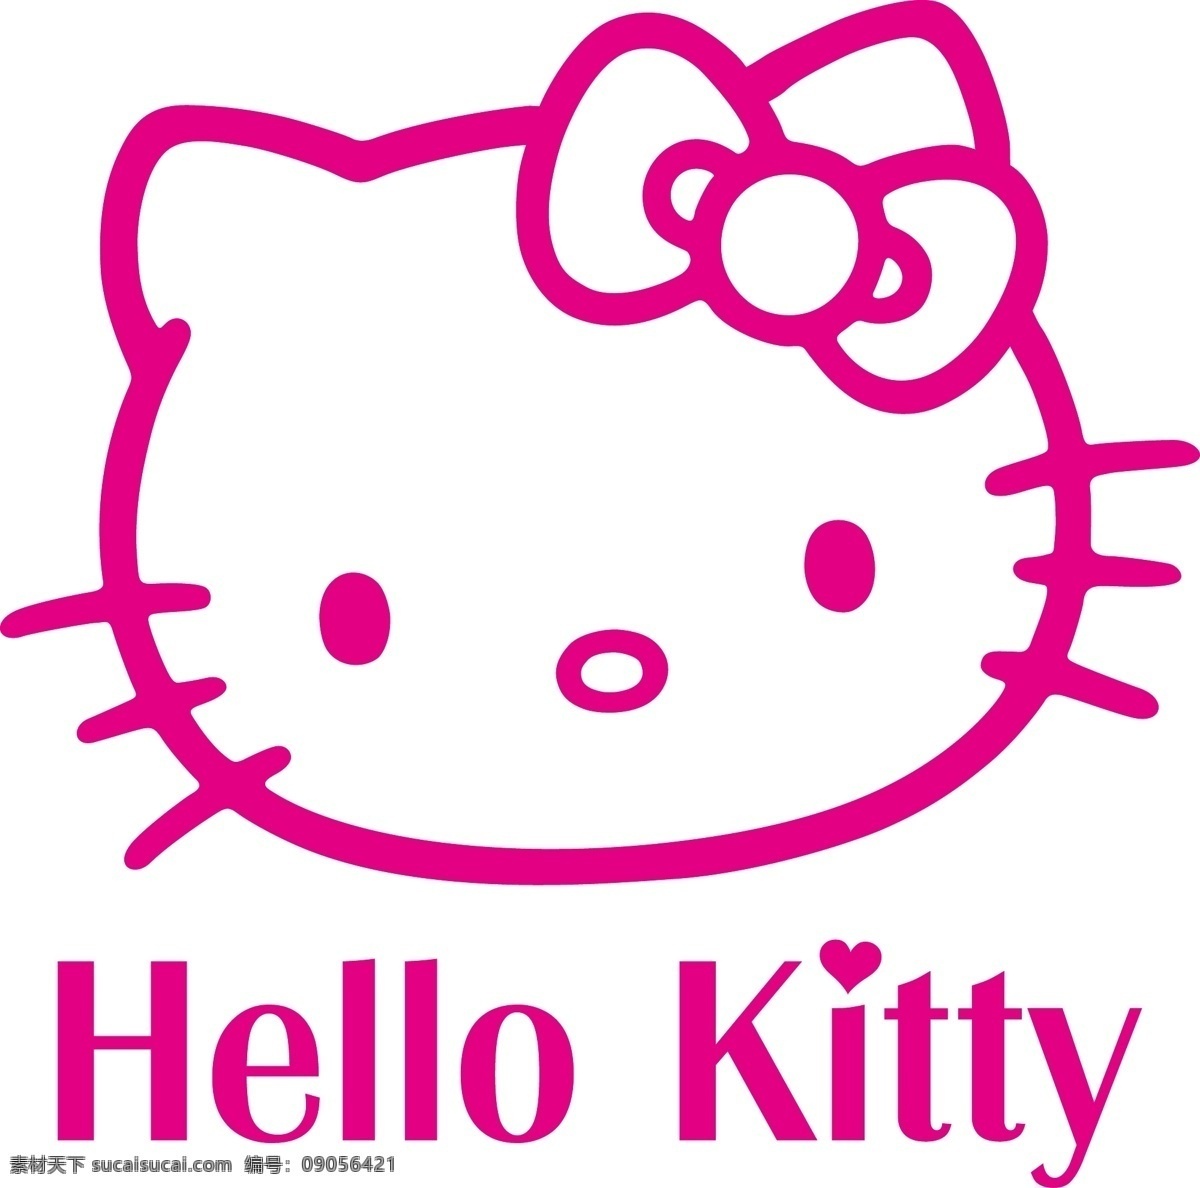 hello kitty 猫猫 卡通小喵 logo 矢量小猫 生活百科 生活用品